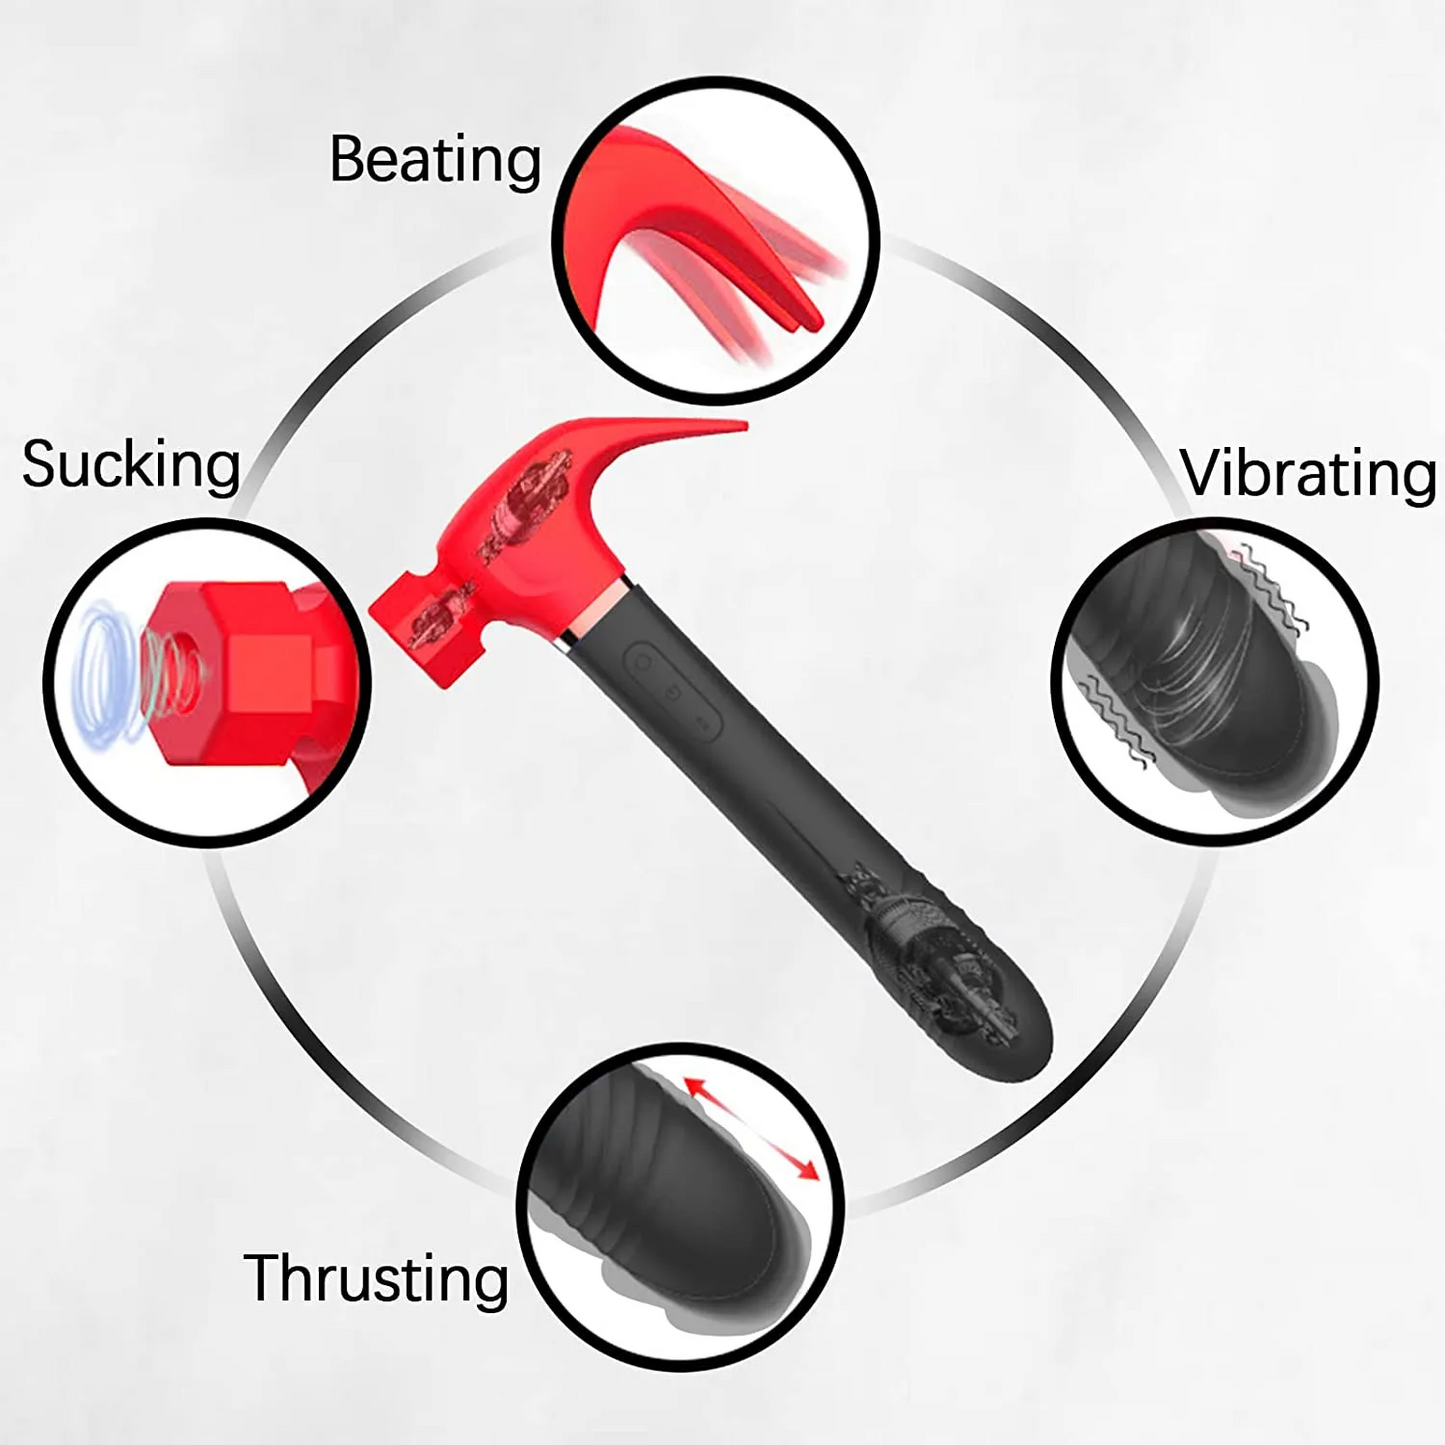 Hammer thrusting vibrator